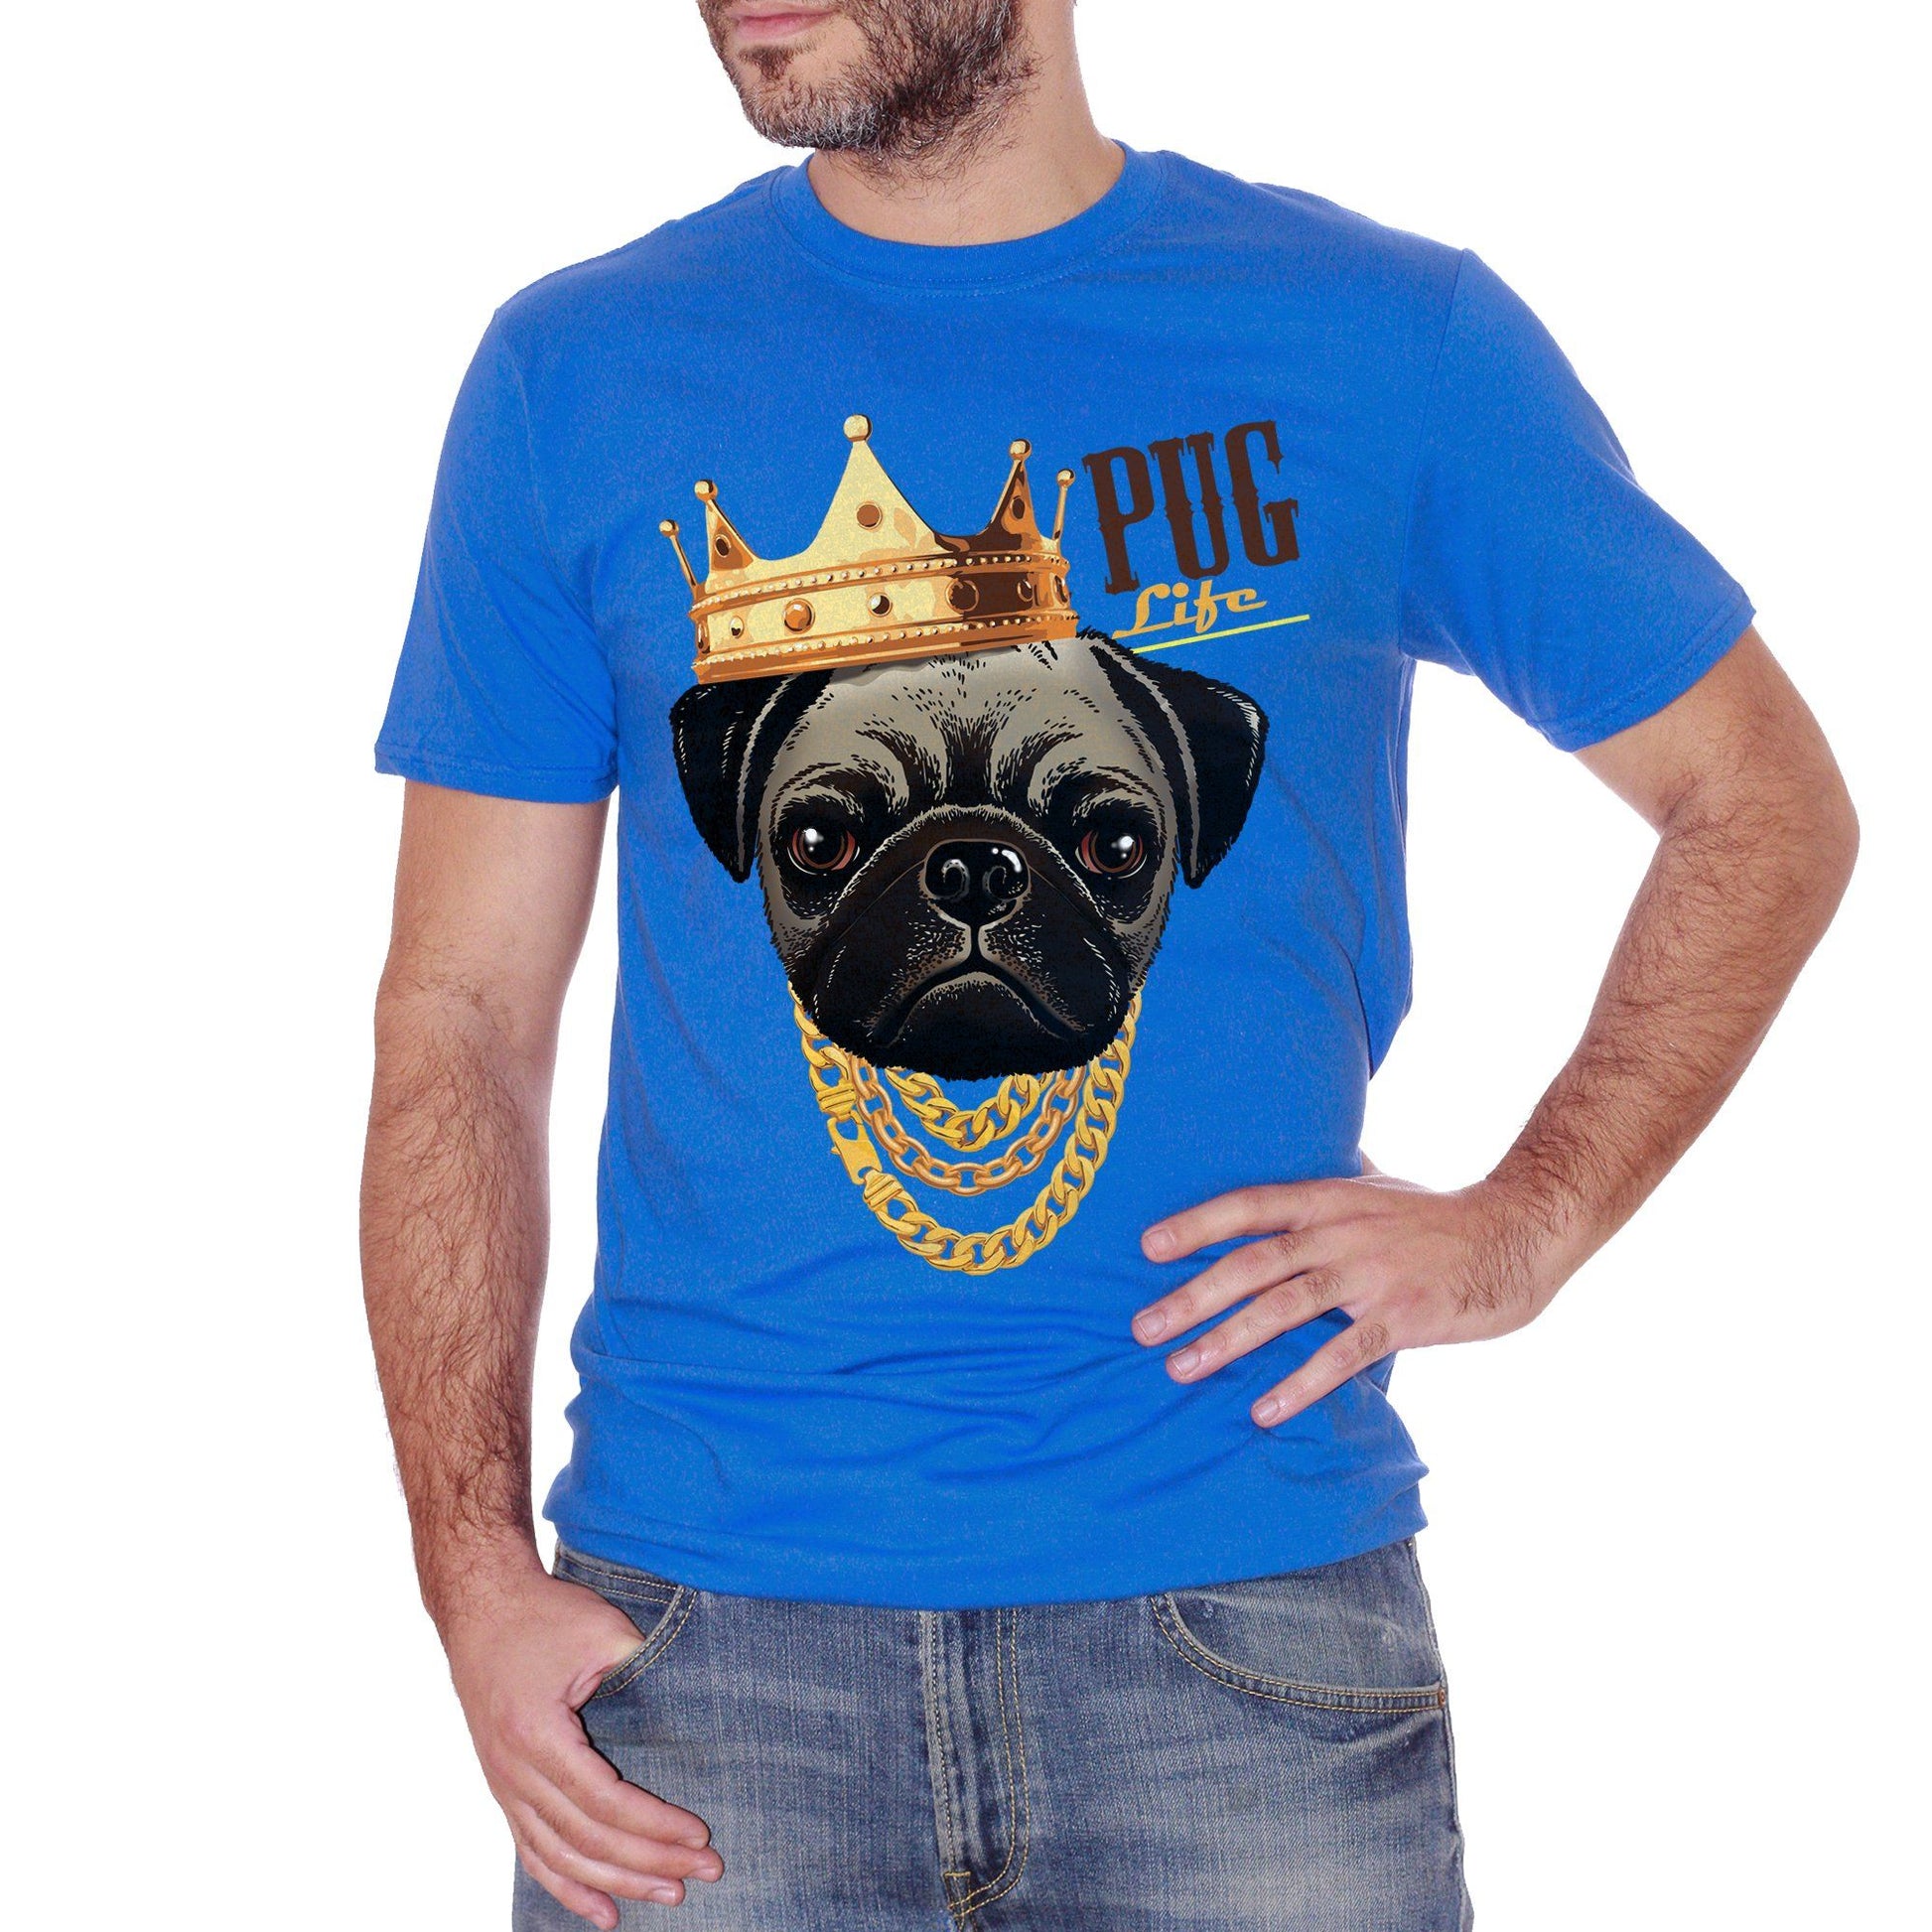 Royal Blue T-Shirt Pug Life Carlino Cane Dog Pet Animali Gold Crown - SOCIAL CucShop